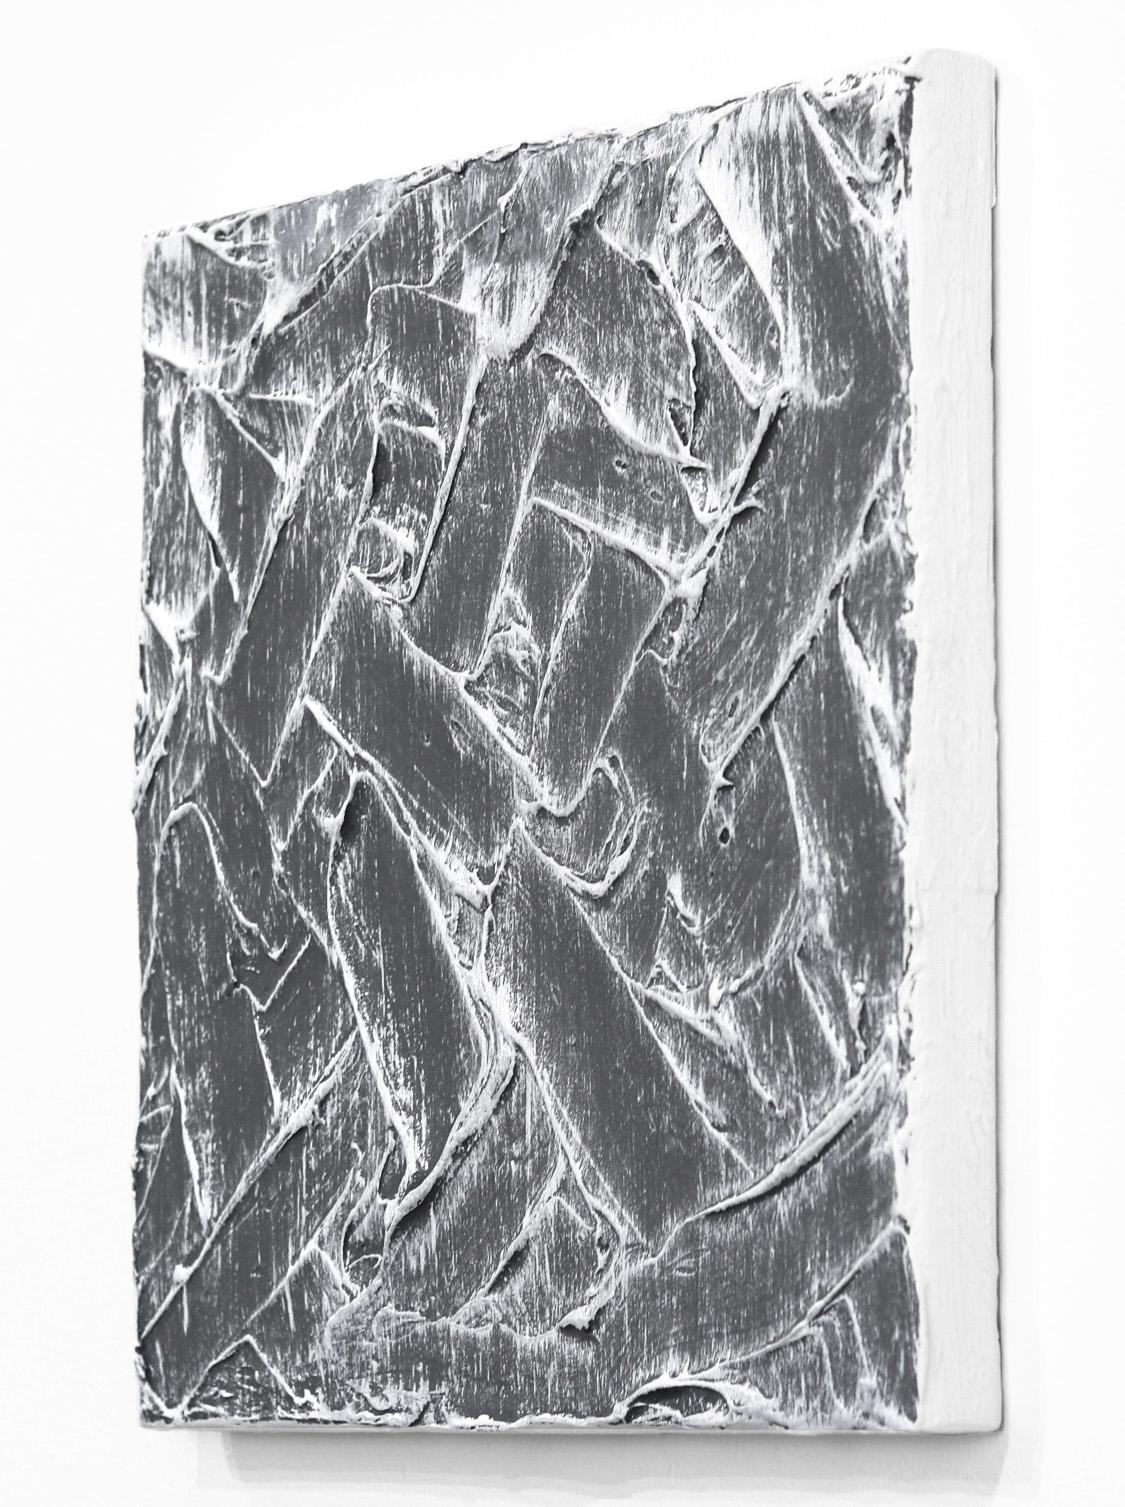 Deep Textures 005 - Gray Abstract Painting by Len Klikunas